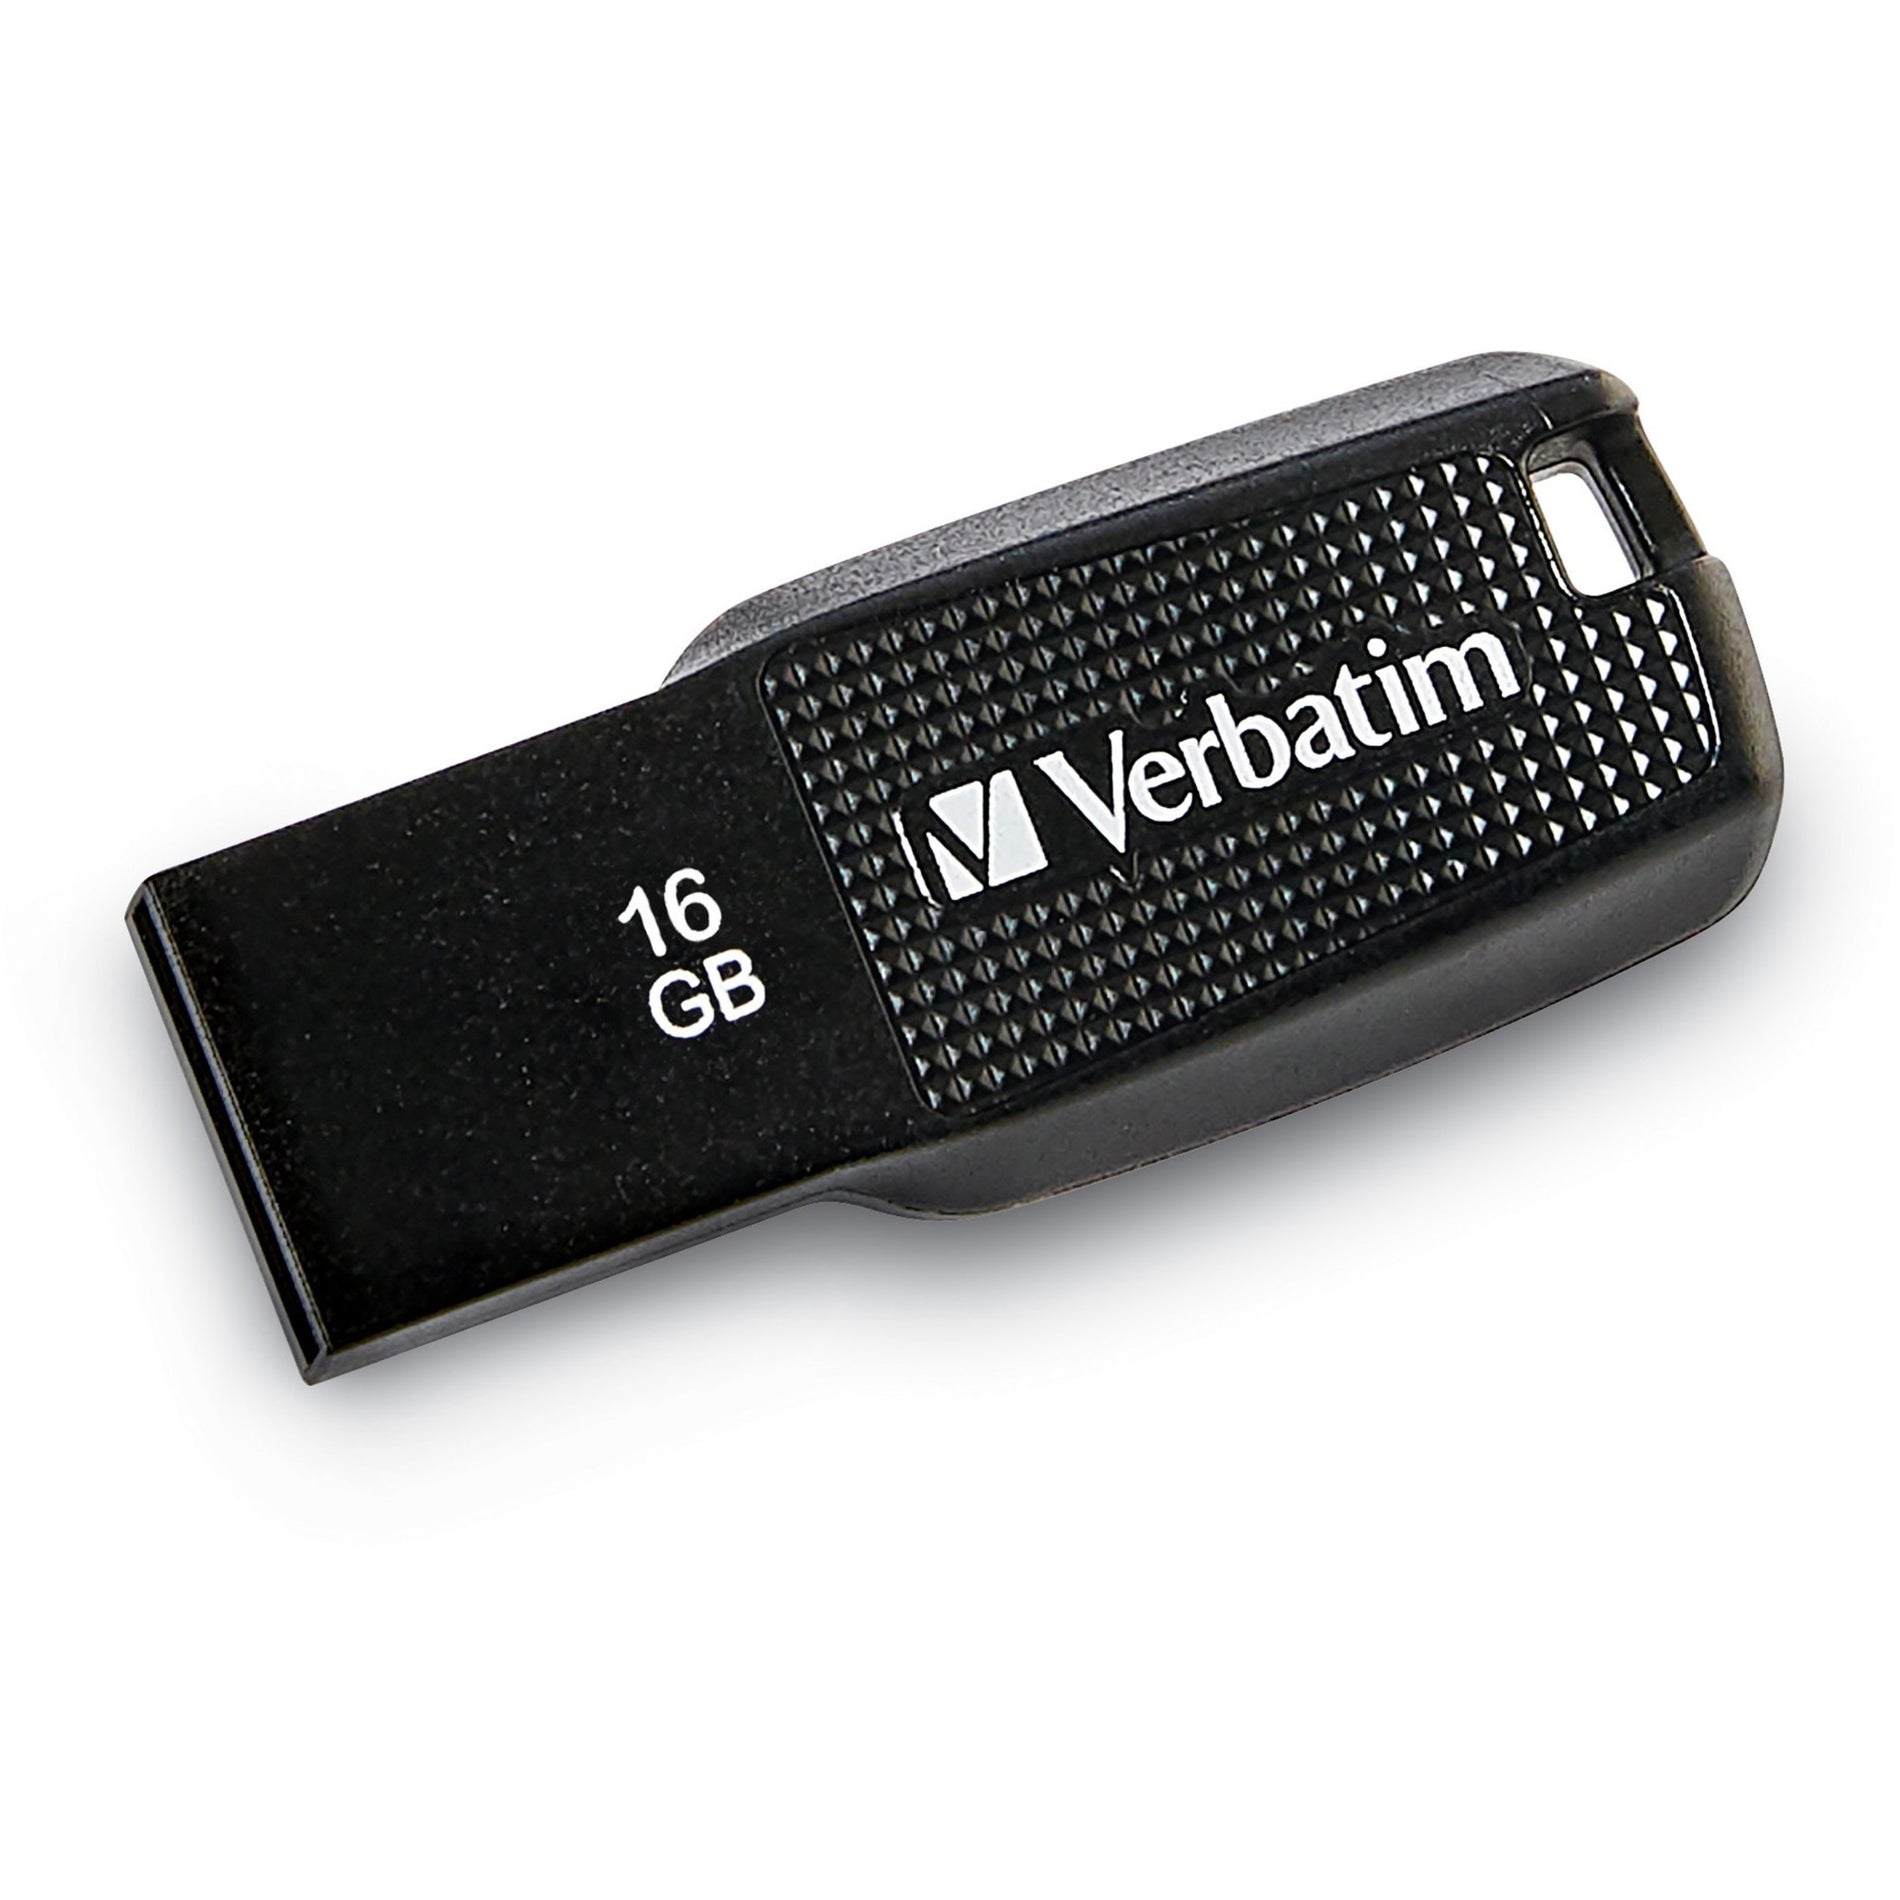 Verbatim 70875 16GB Ergo USB Flash Drive - Black, Antimicrobial, Password Protection, Capless, Lanyard, Ergonomic